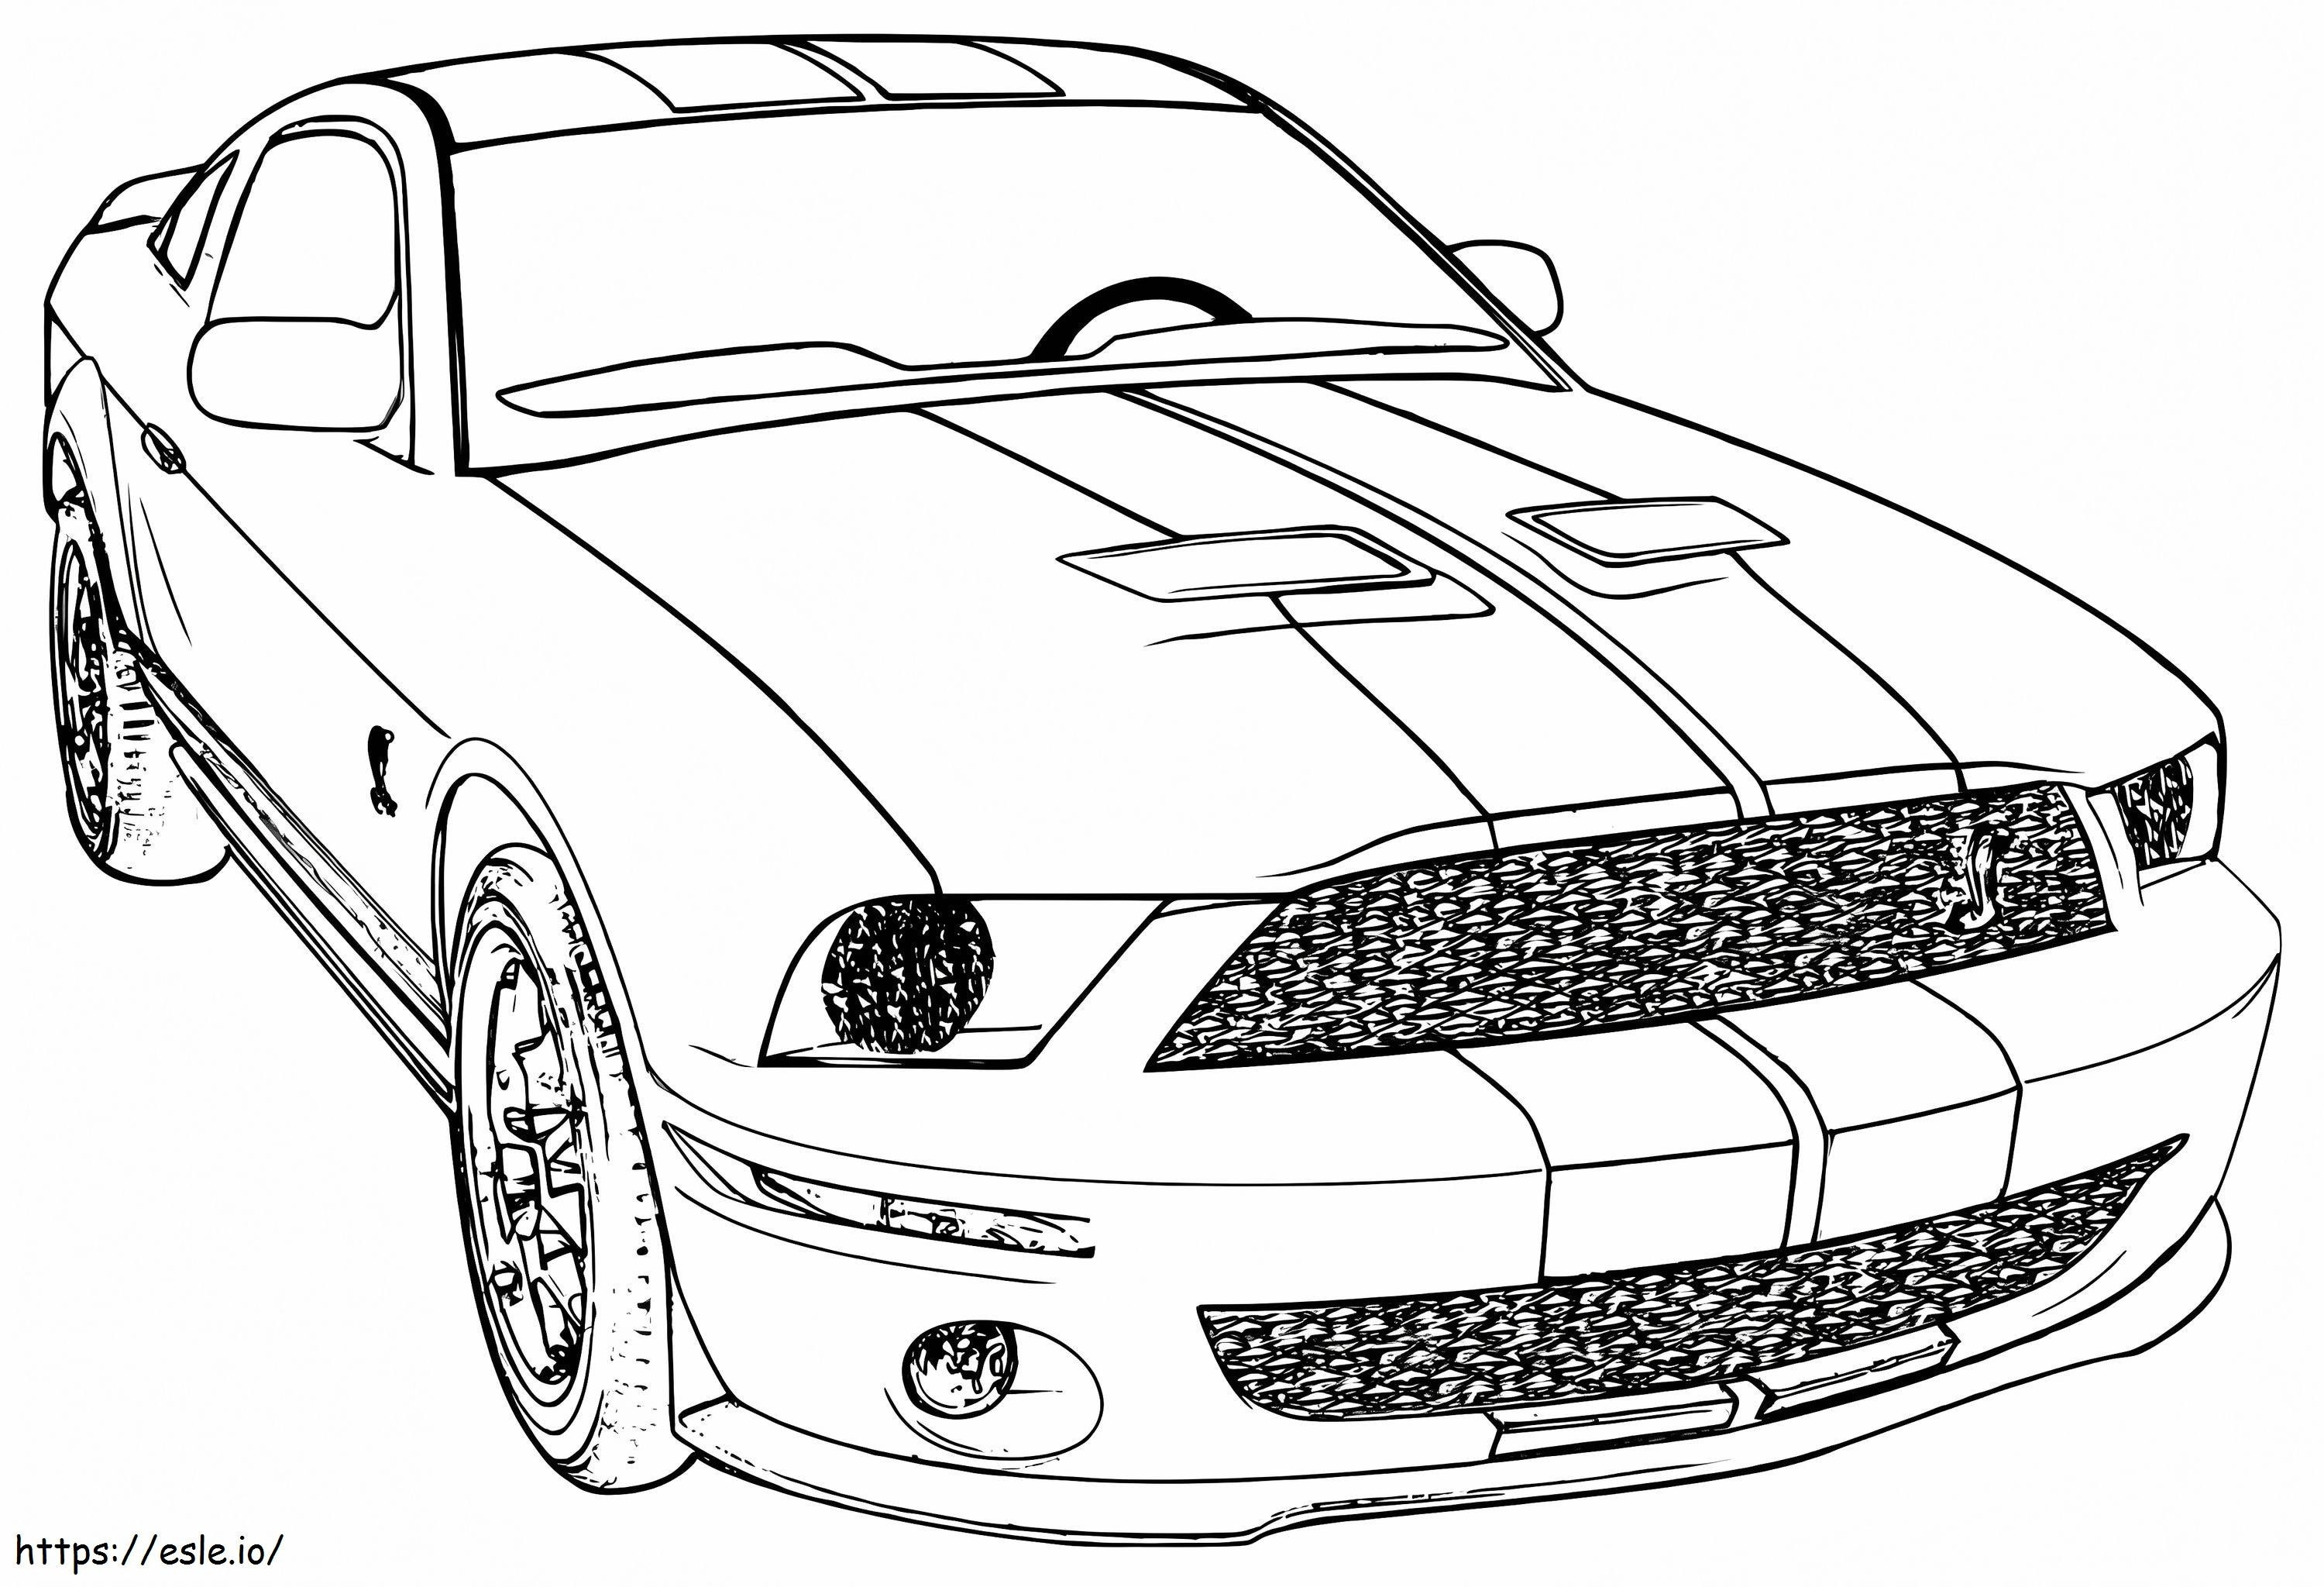 Impressionante Ford Mustang para colorir